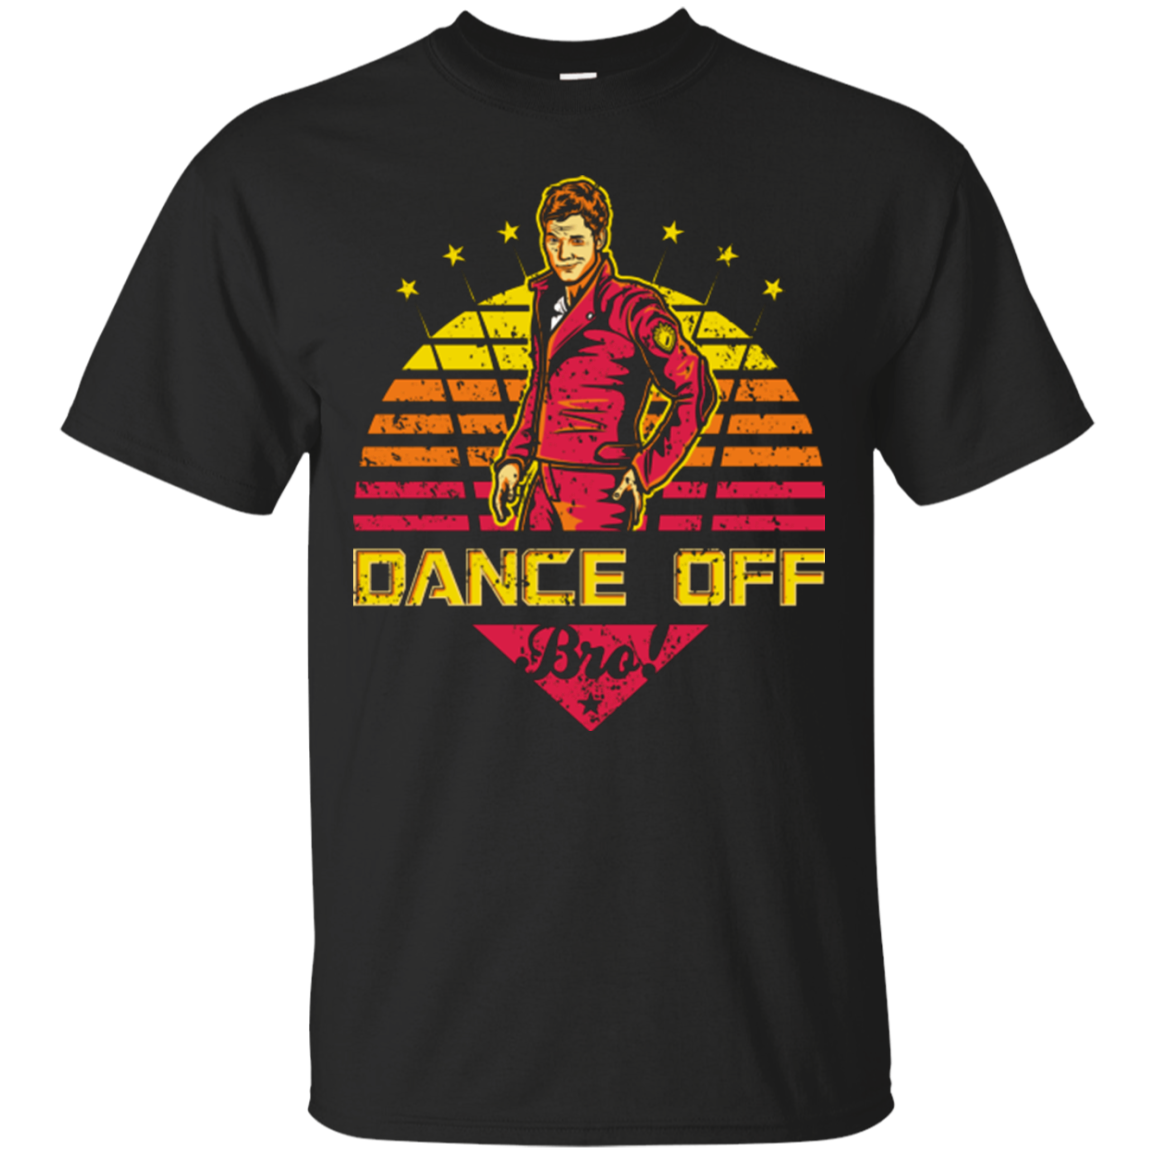 Dance Off Bro T-Shirt